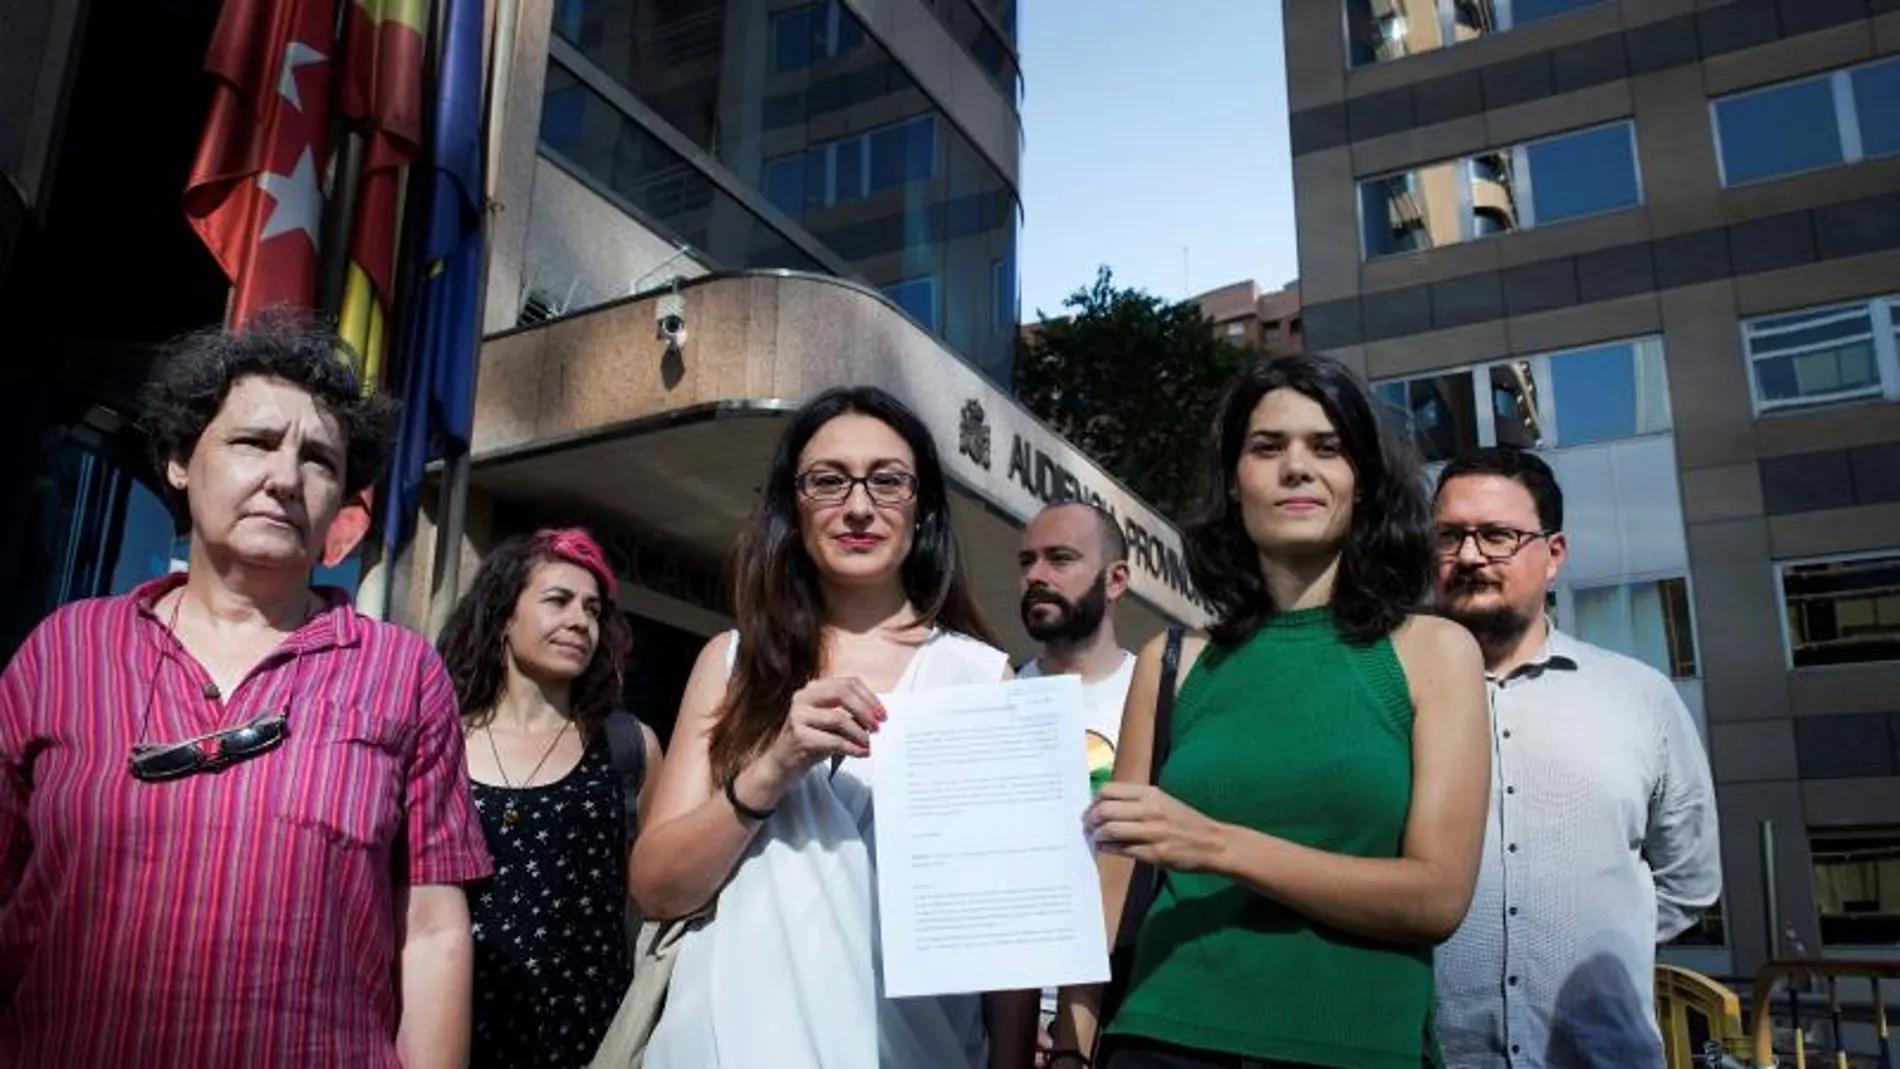 Podemos e Izquierda Unida denuncian a Vox ante la Fiscalía